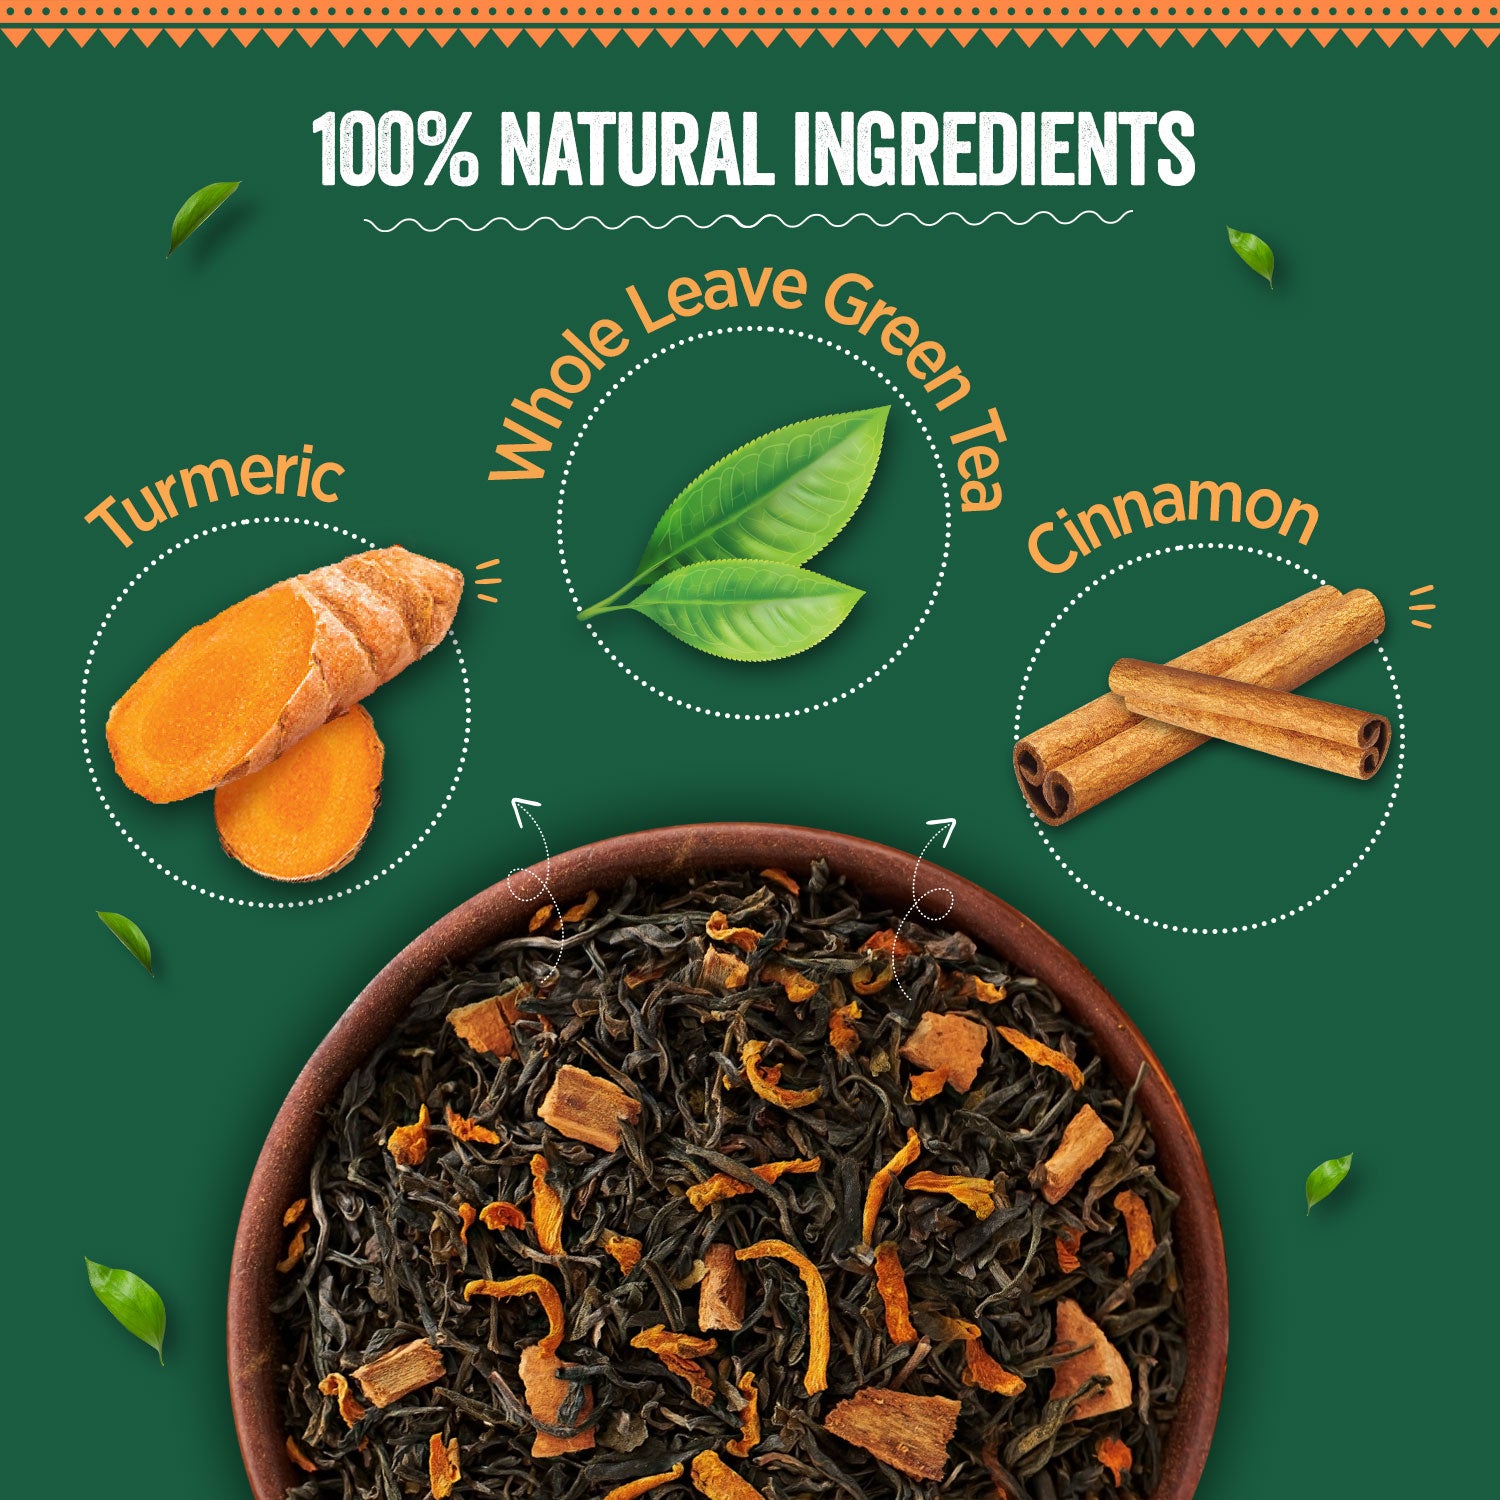 Turmeric Cinnamon Green Tea - 100g